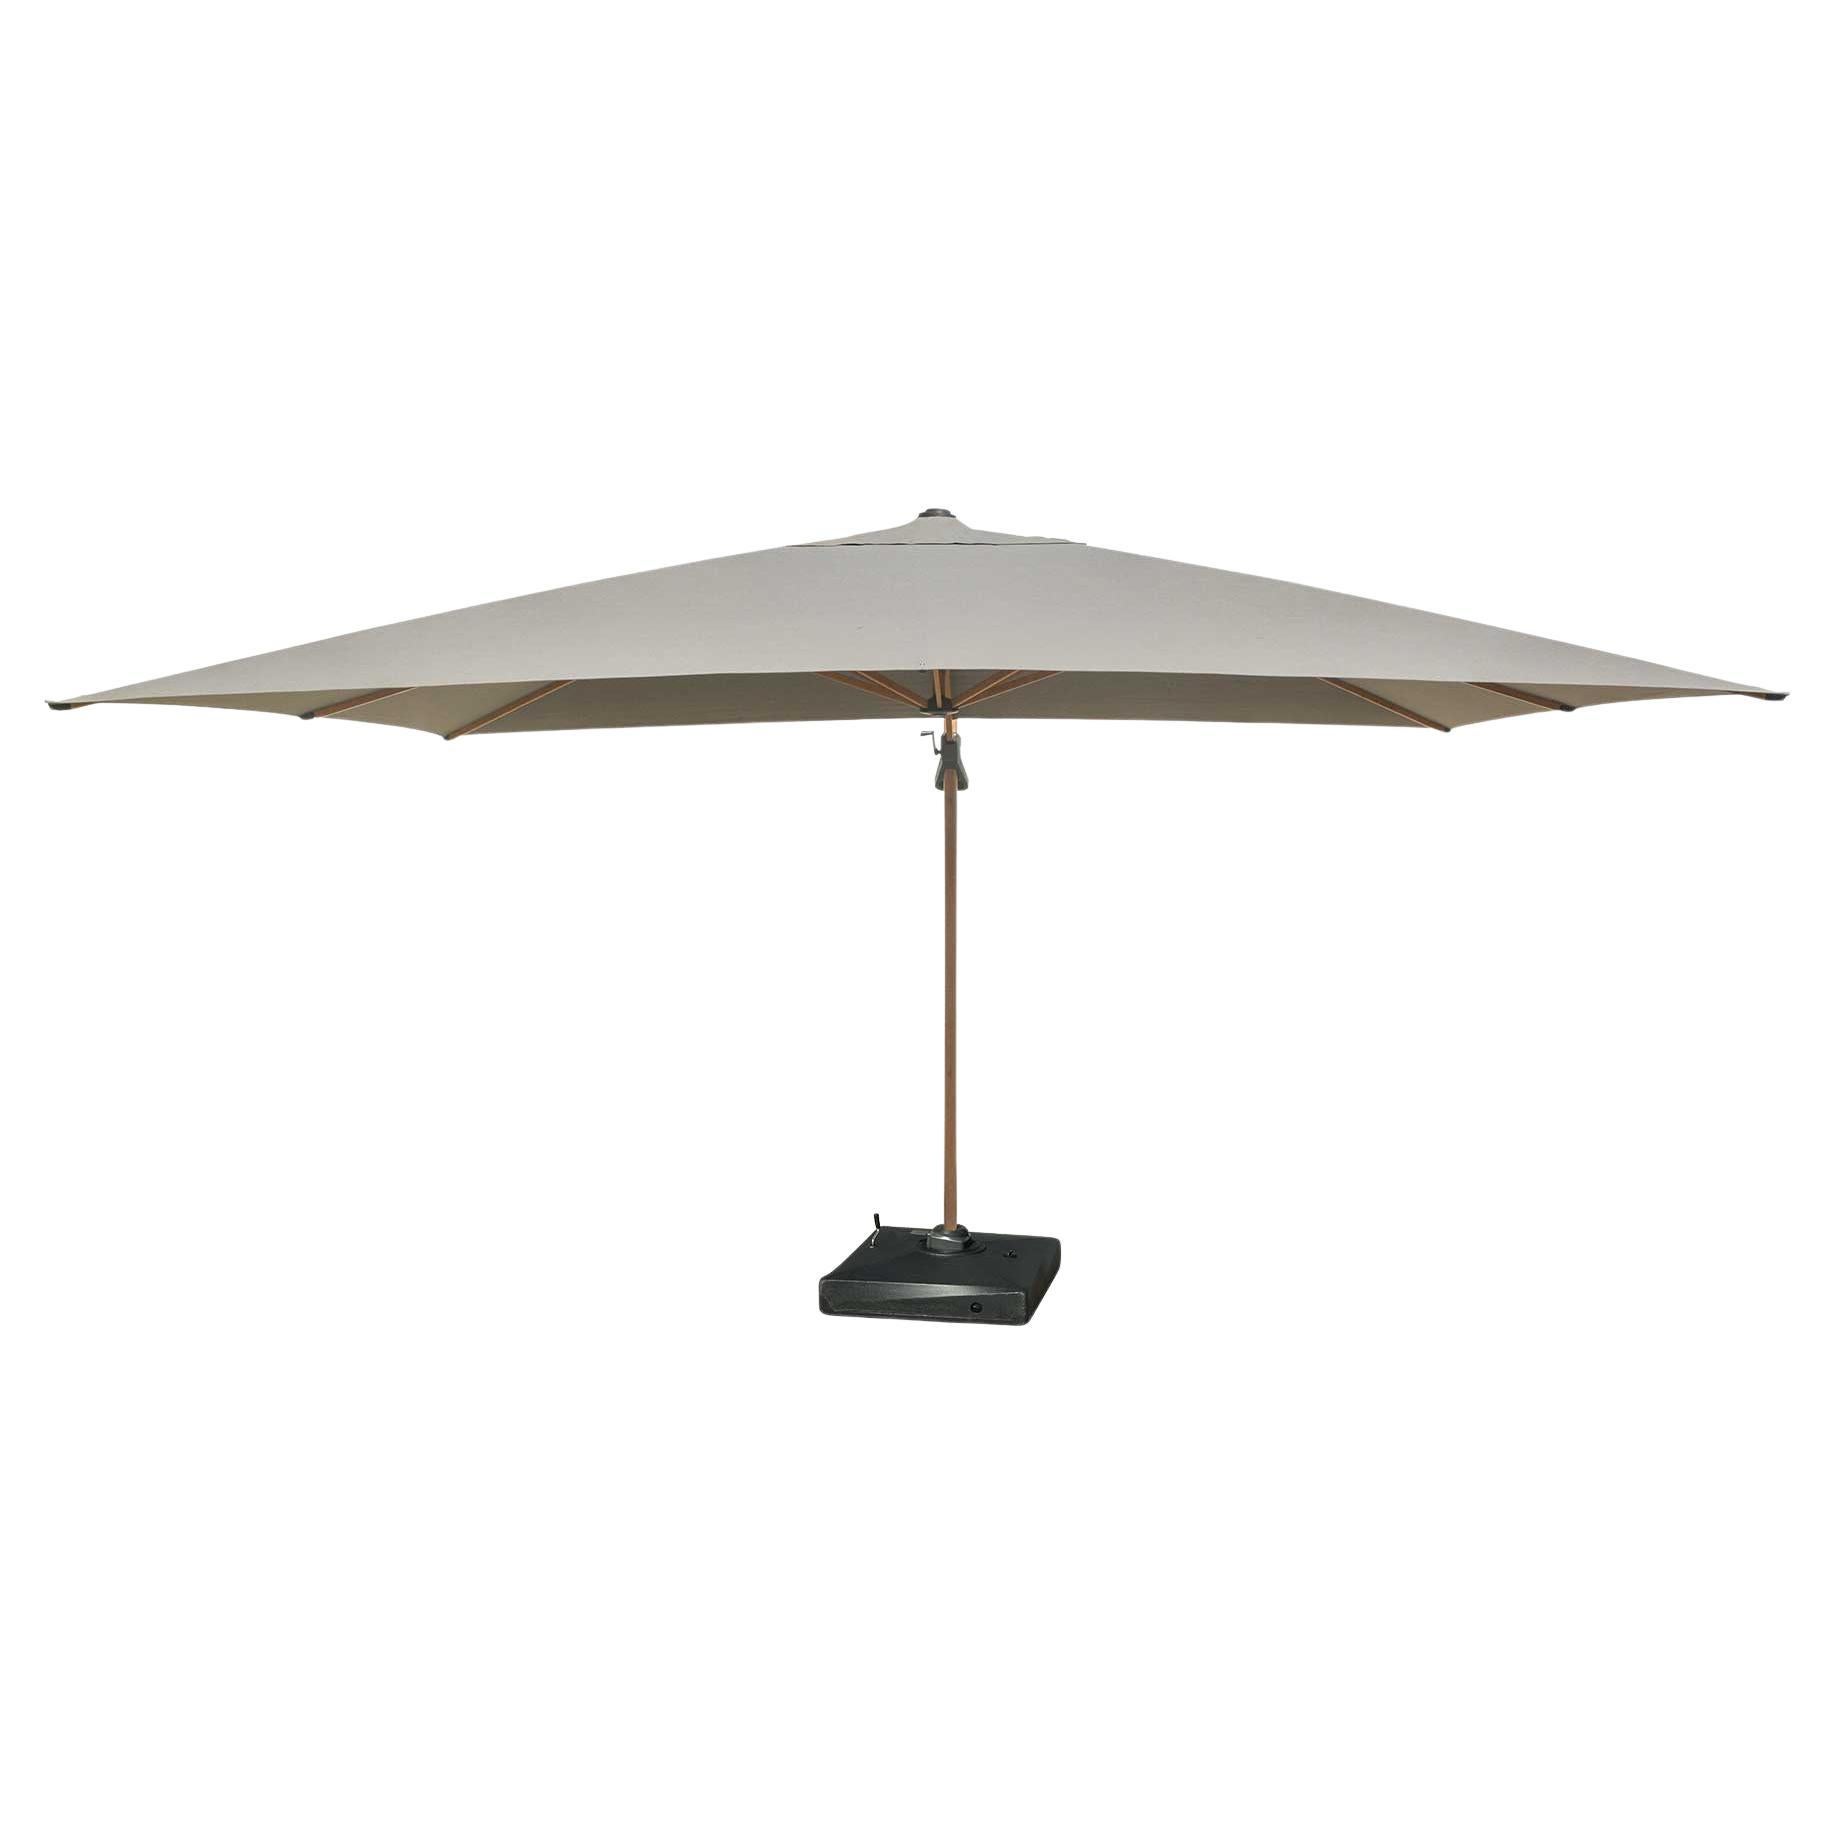 Claude Beige XL Umbrella by Snoc For Sale